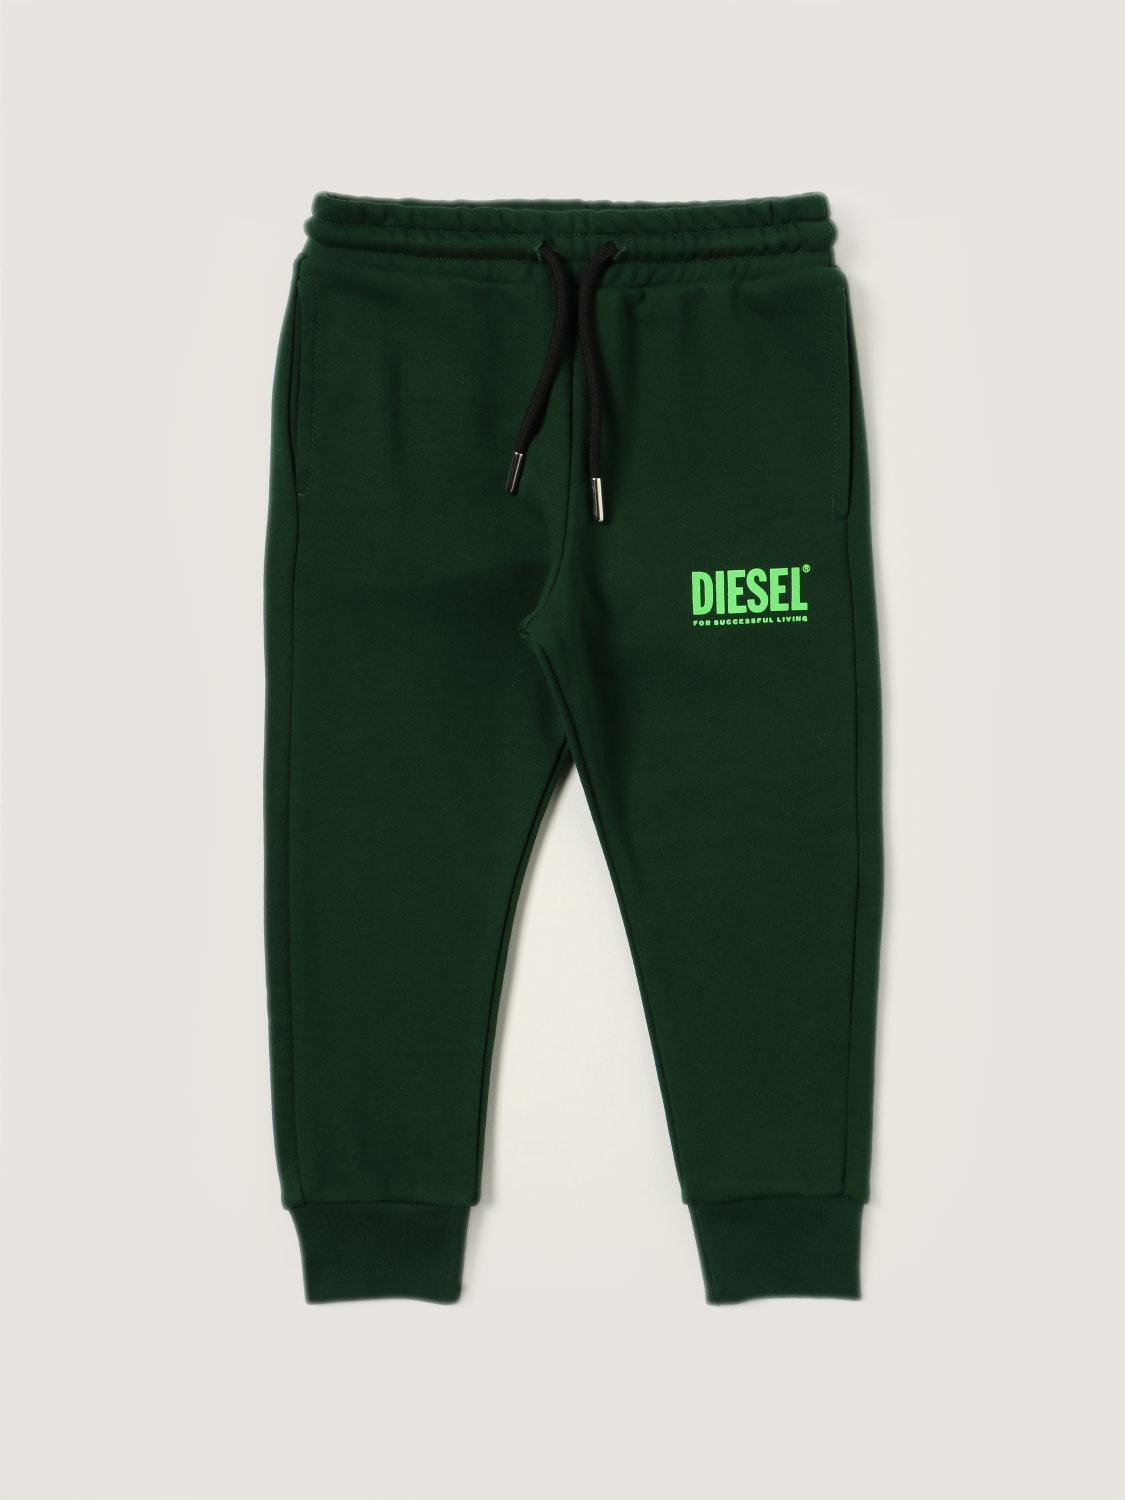 裤子 Diesel: Diesel Logo 棉质慢跑裤 绿色 2